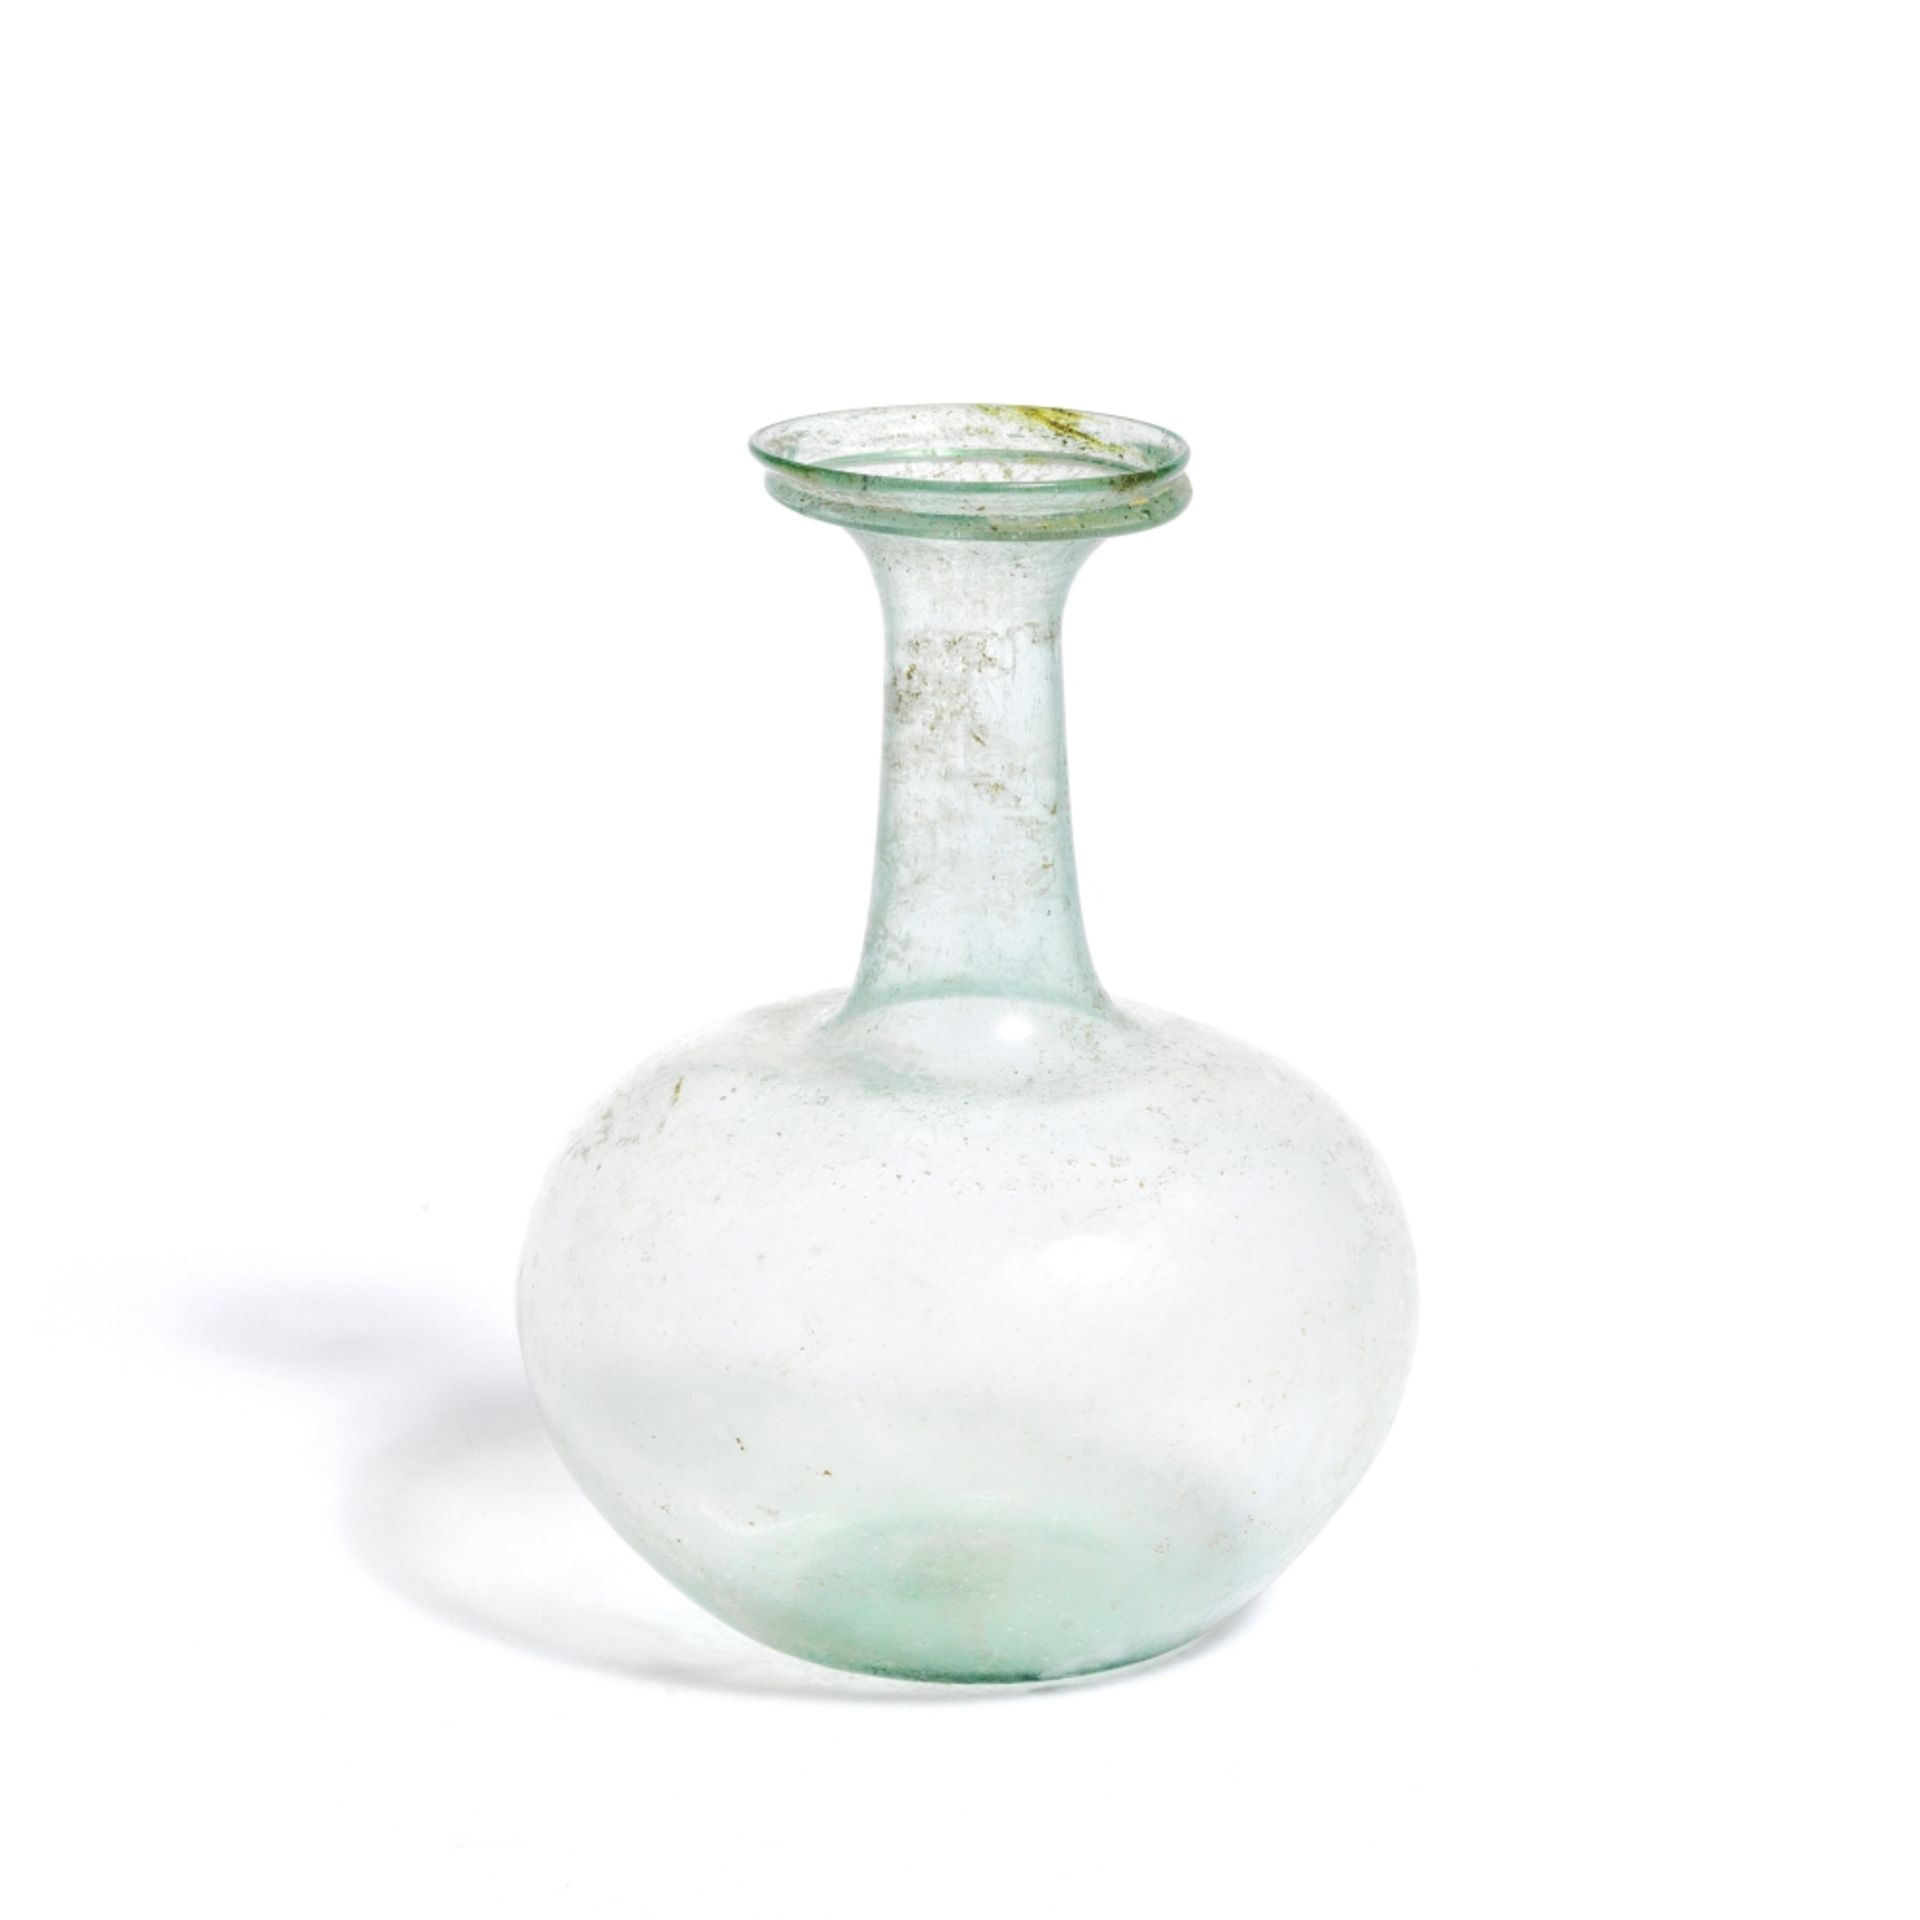 A Roman pale blue-green glass spherical flask